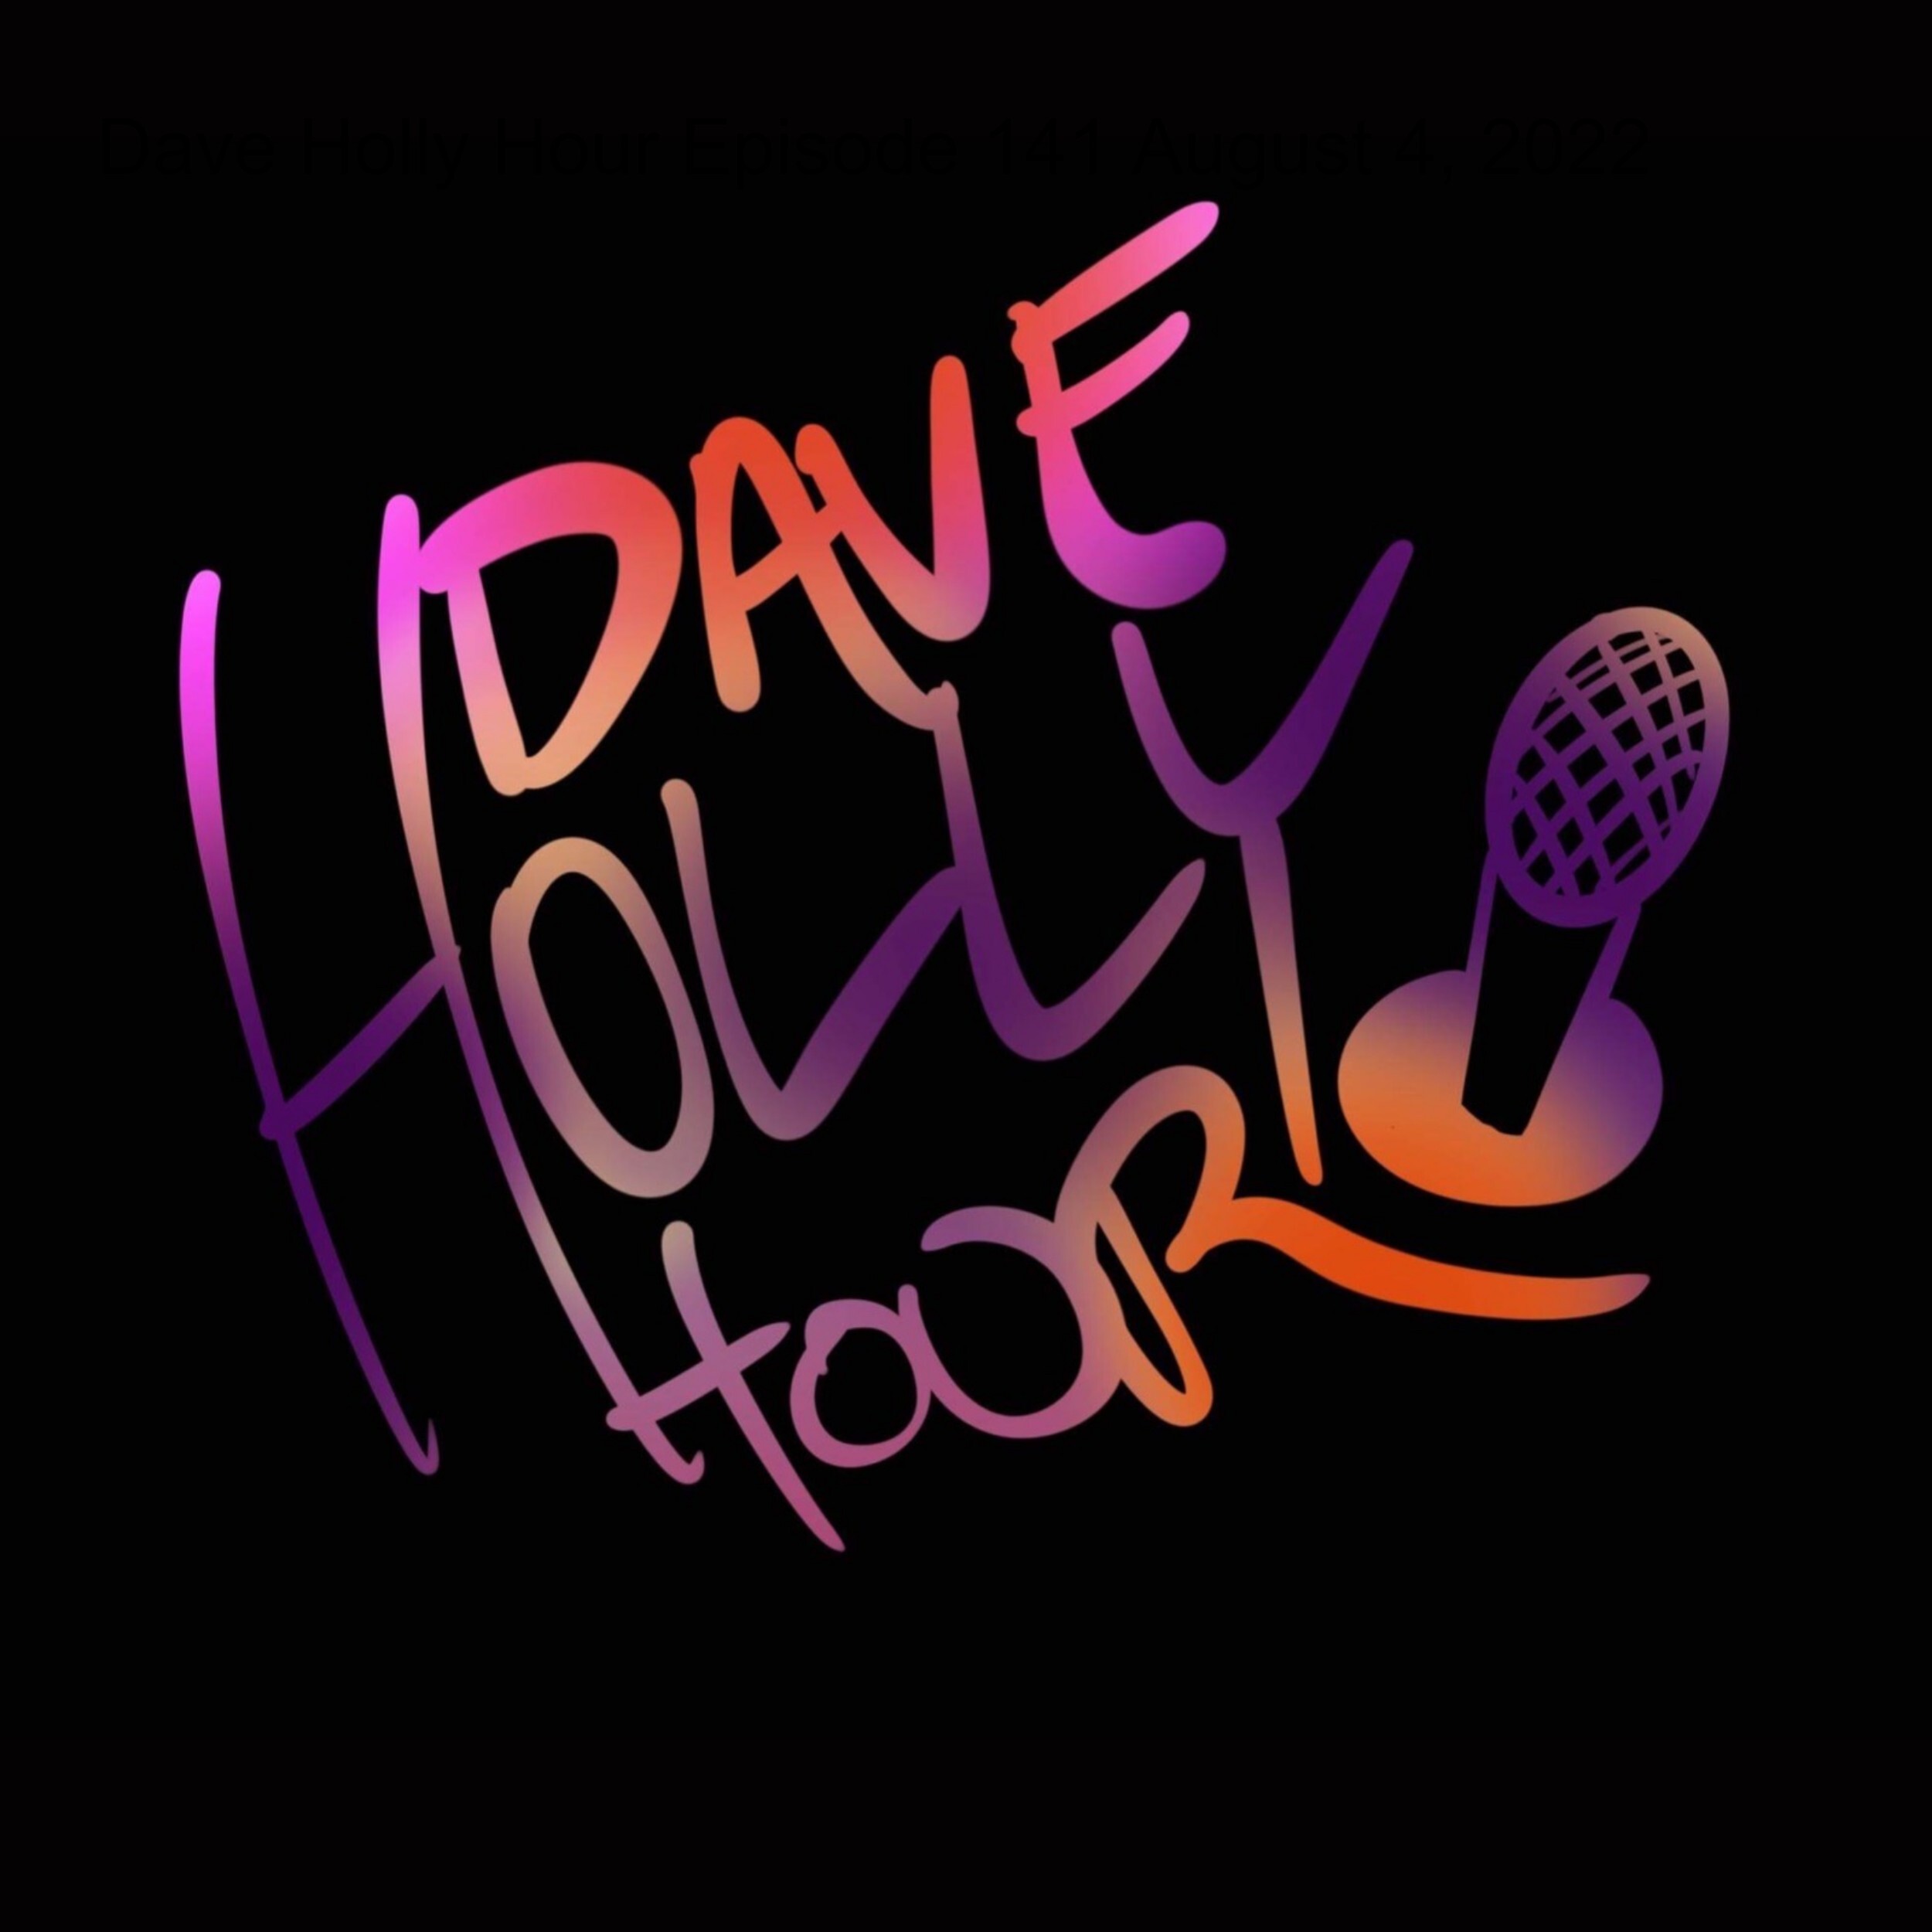 Dave Holly Hour Episode 147 September 15, 2022 Image